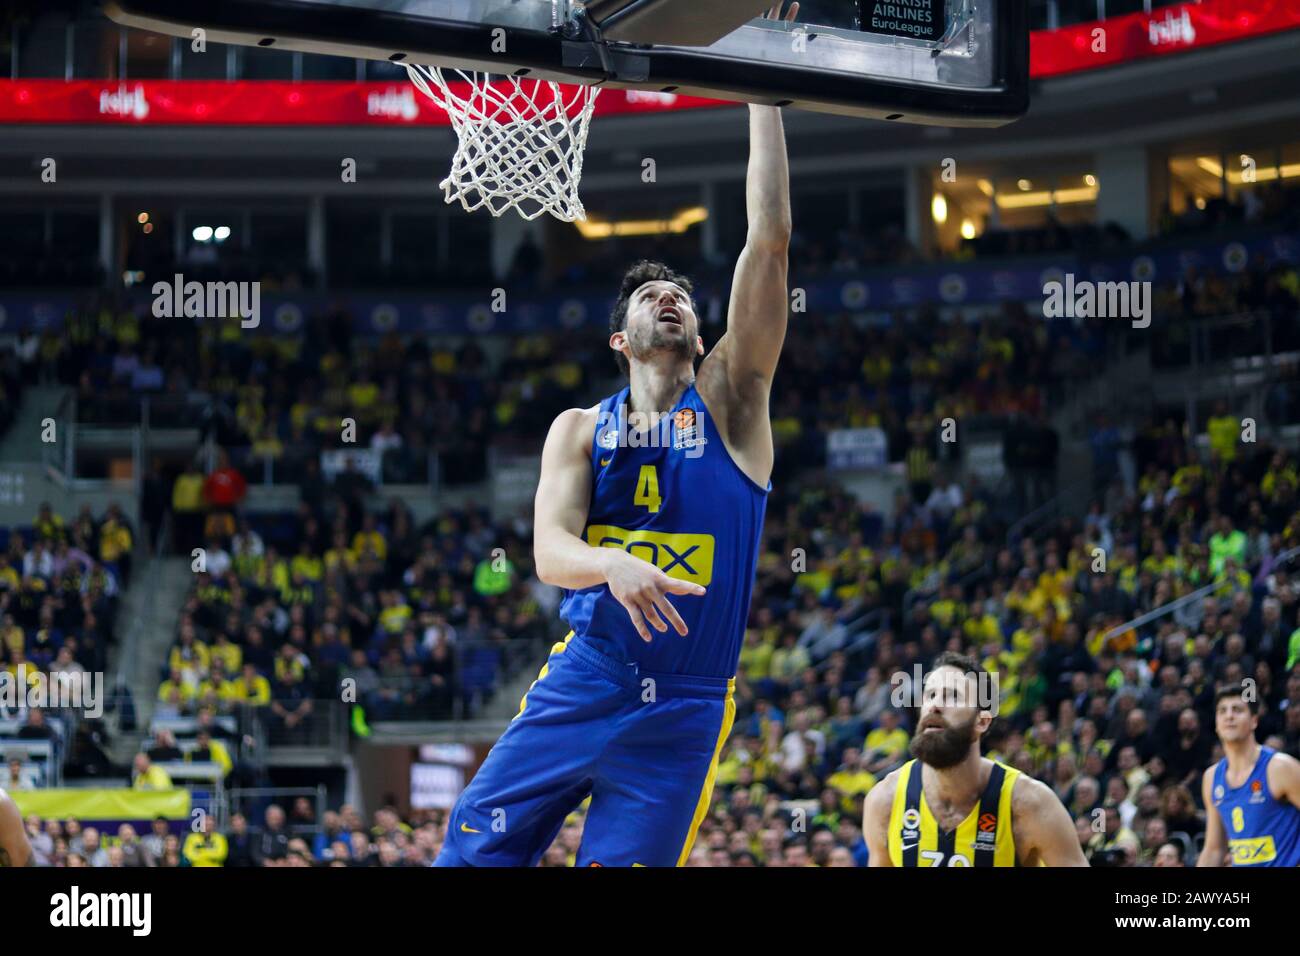 FenerbahÃ§e - Maccabi Tel Aviv / 2019-2020 EuroLeague Round 24 Game  Editorial Stock Photo - Image of basketball, event: 172094358